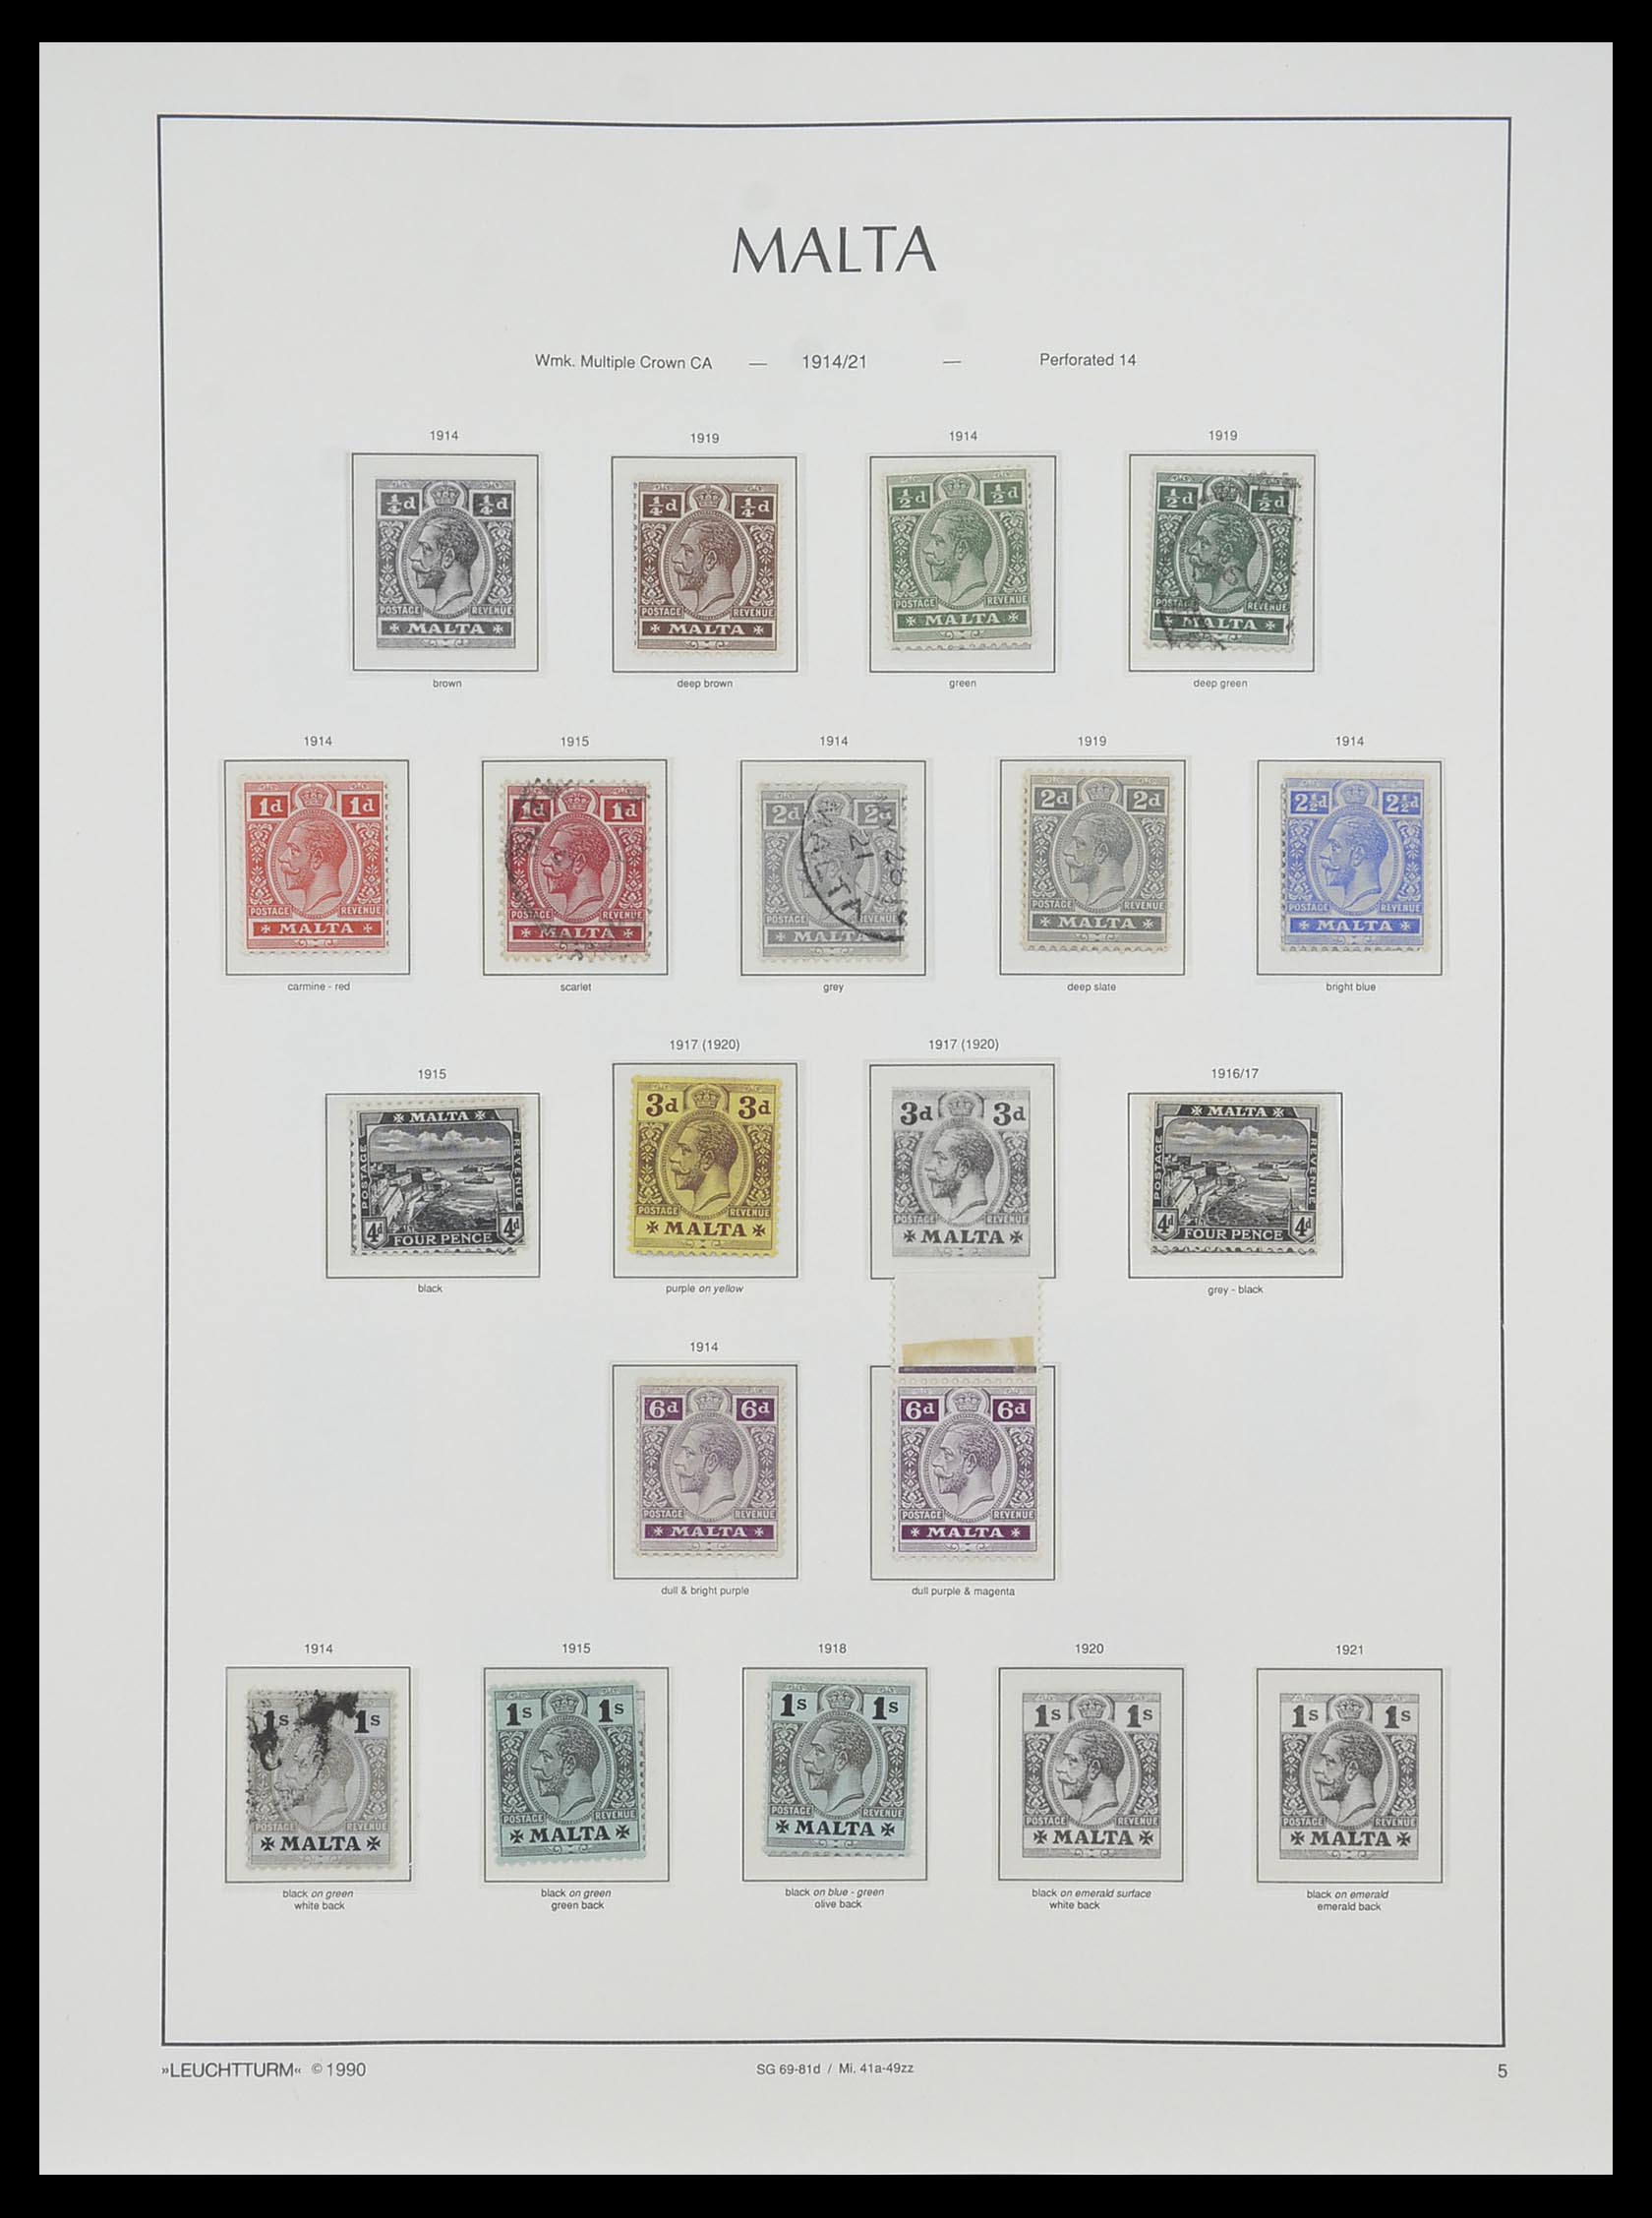 33968 005 - Stamp collection 33968 Malta 1861-2001.